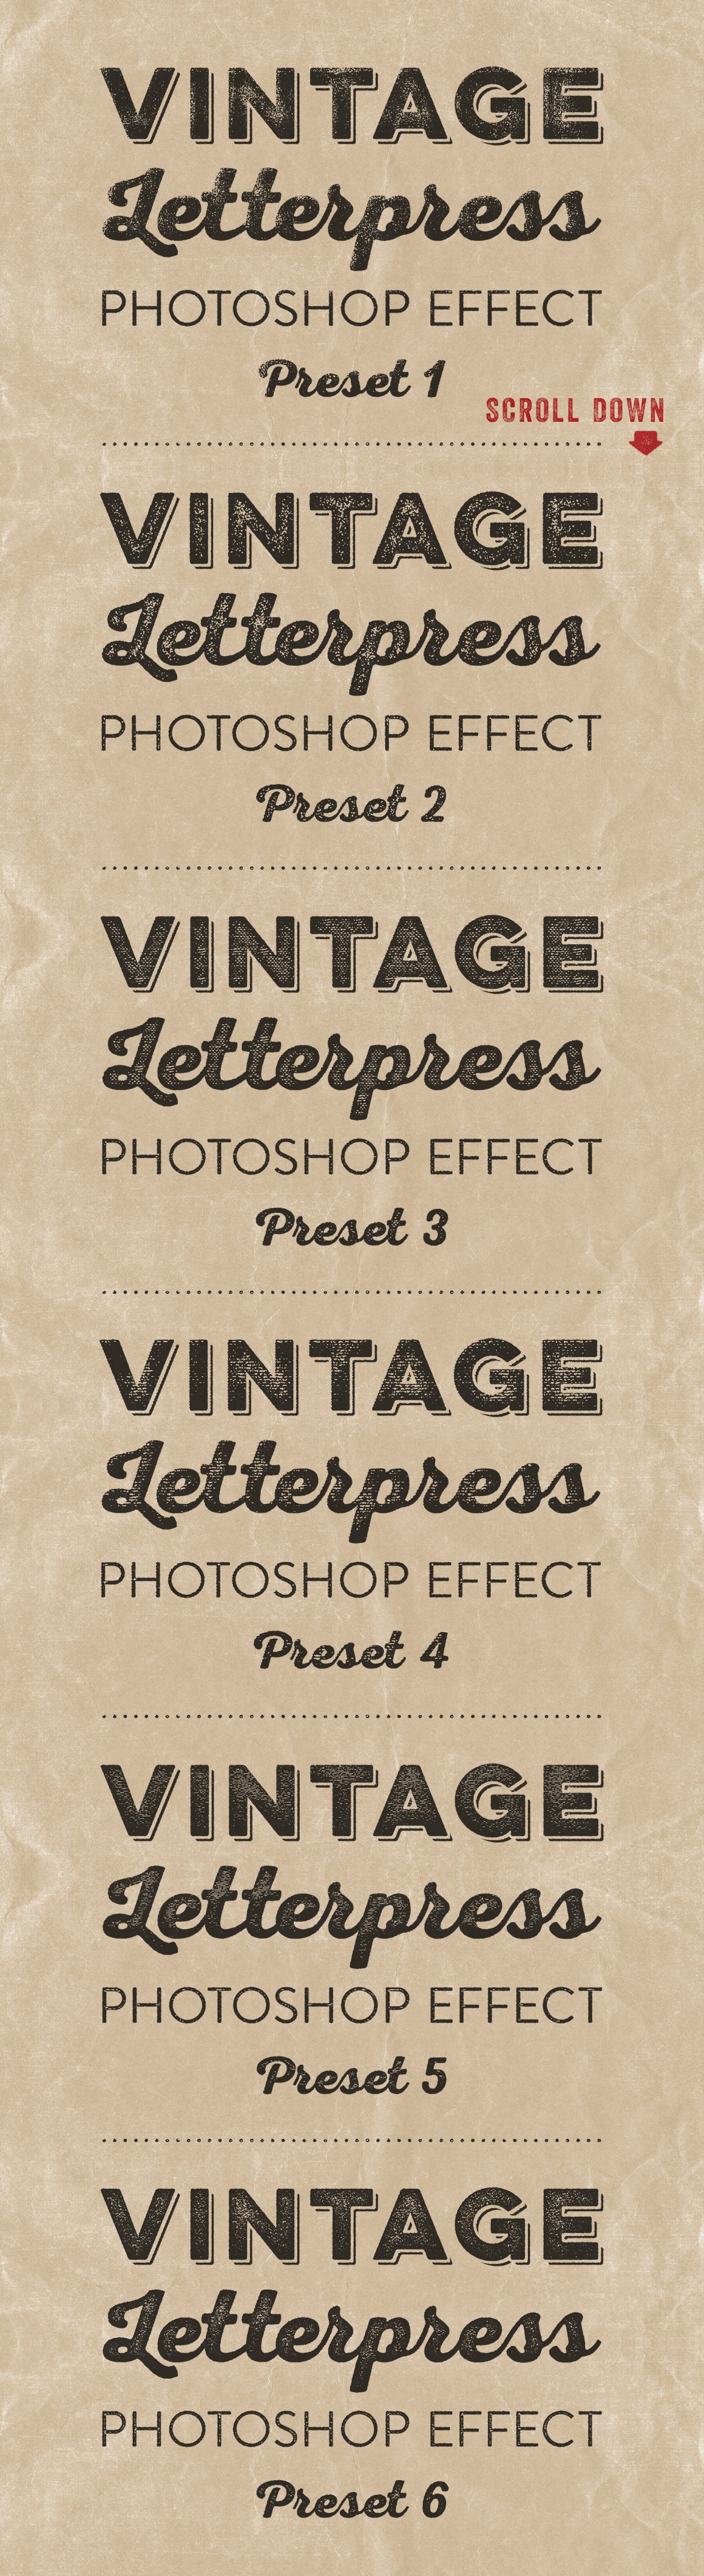 Letterpress Photoshop Effectspreview image.